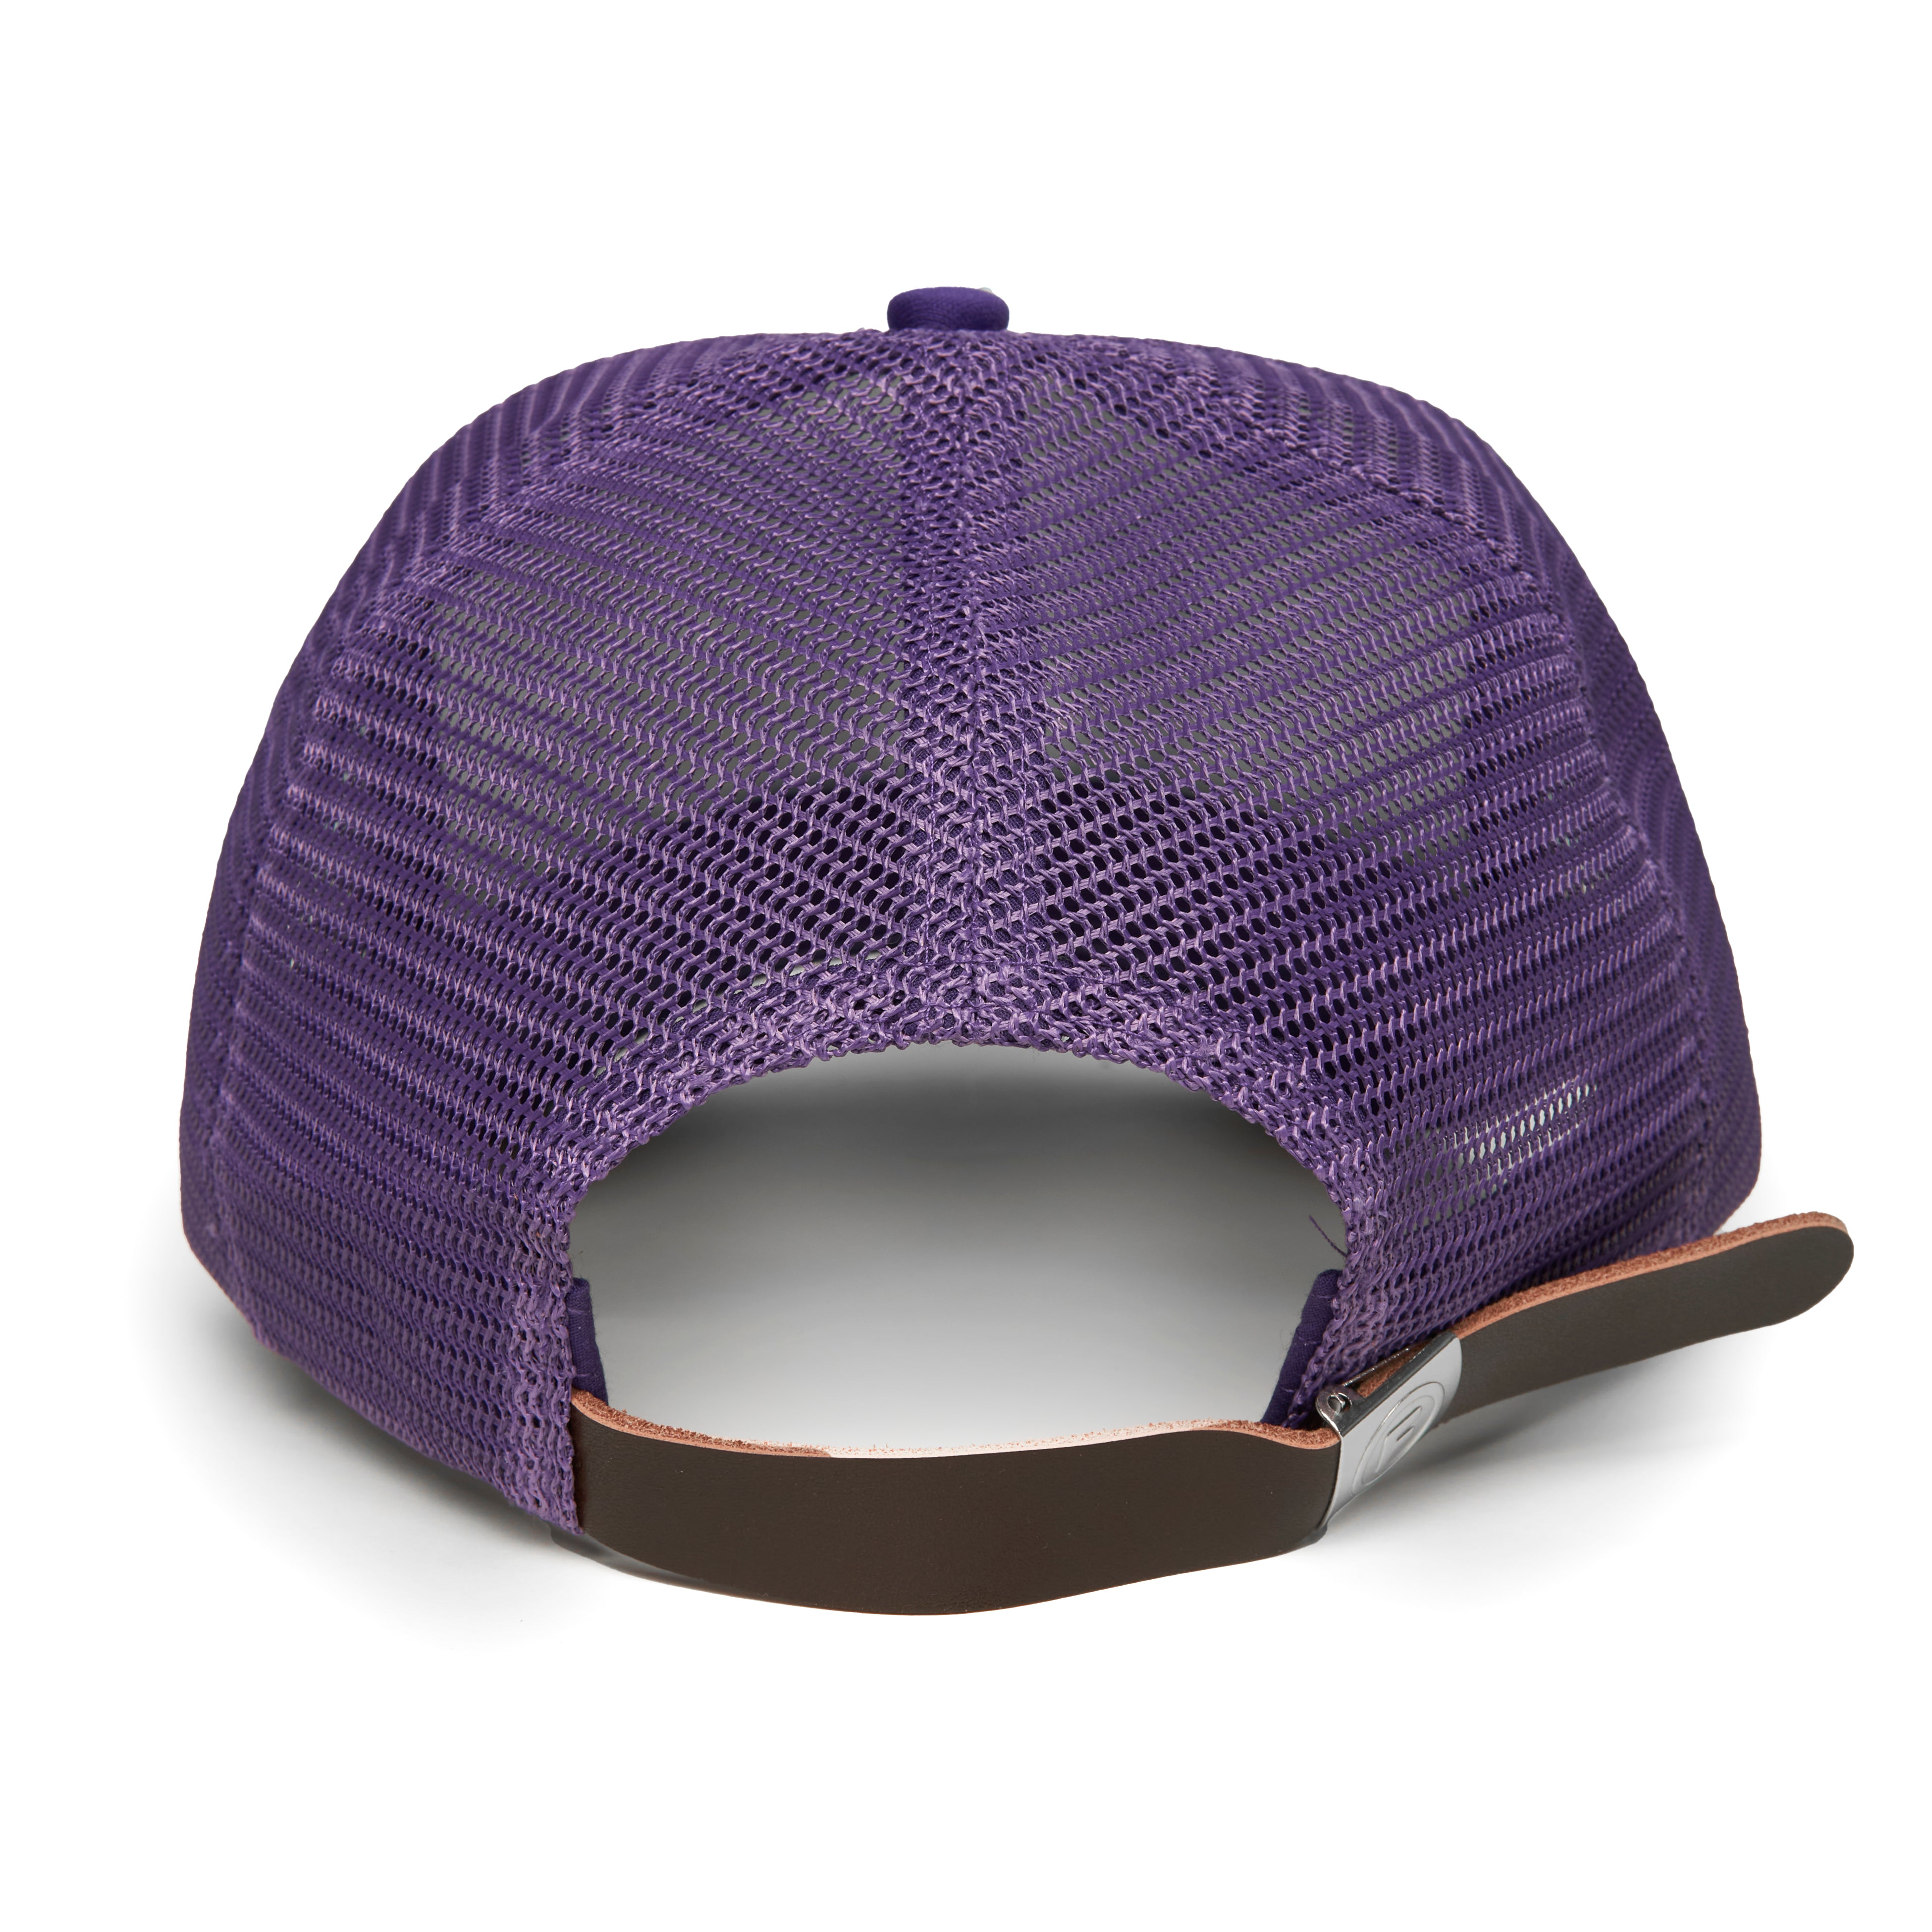 OriginalFani®design "Big F" Trucker Hat (Purple)